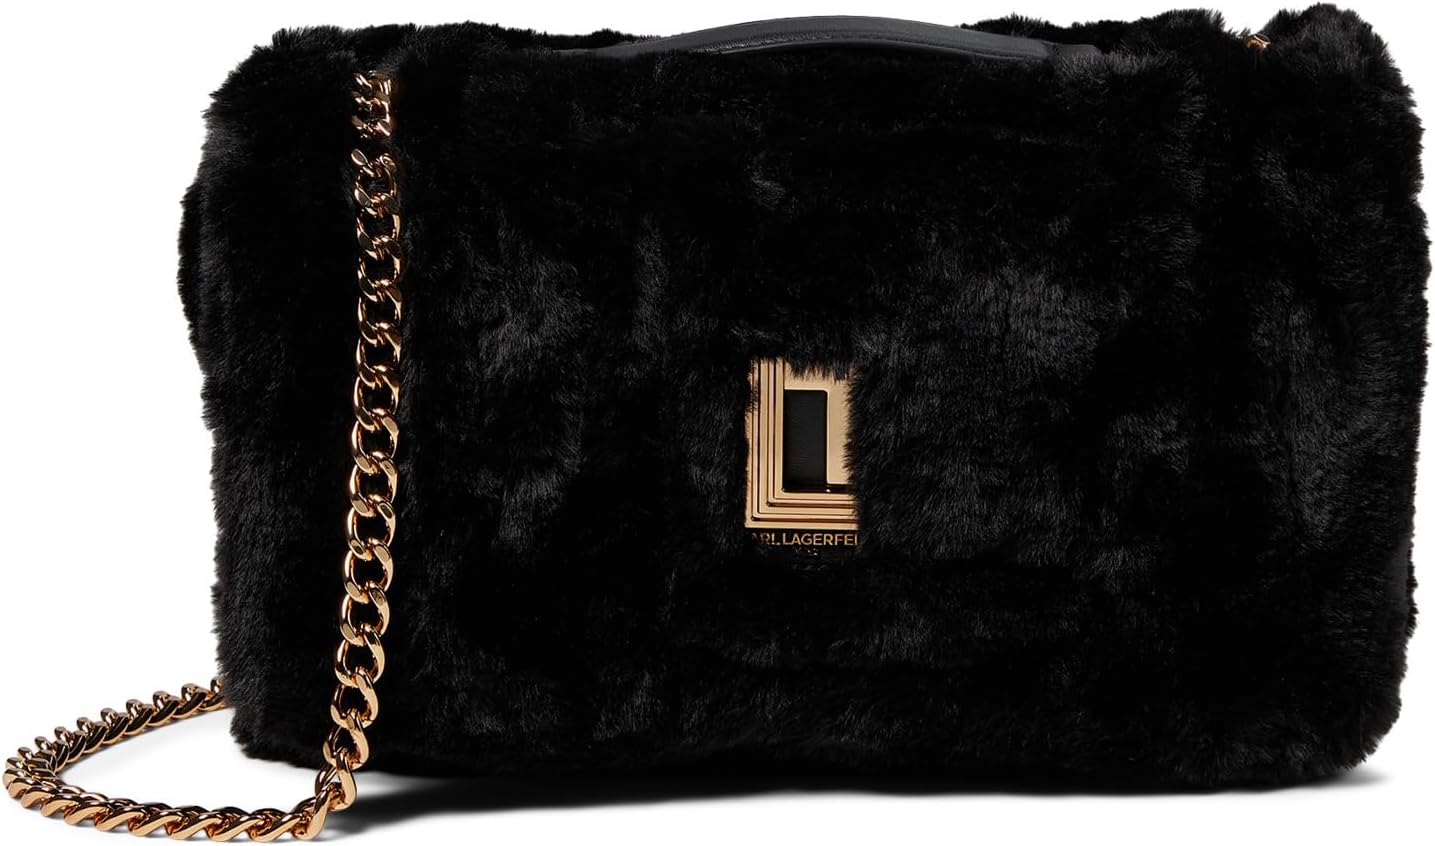 Сумка Lafayette Shoulder Karl Lagerfeld Paris, цвет Black/Black сумка на плечо lafayette с узором гусиные лапки karl lagerfeld paris цвет black white